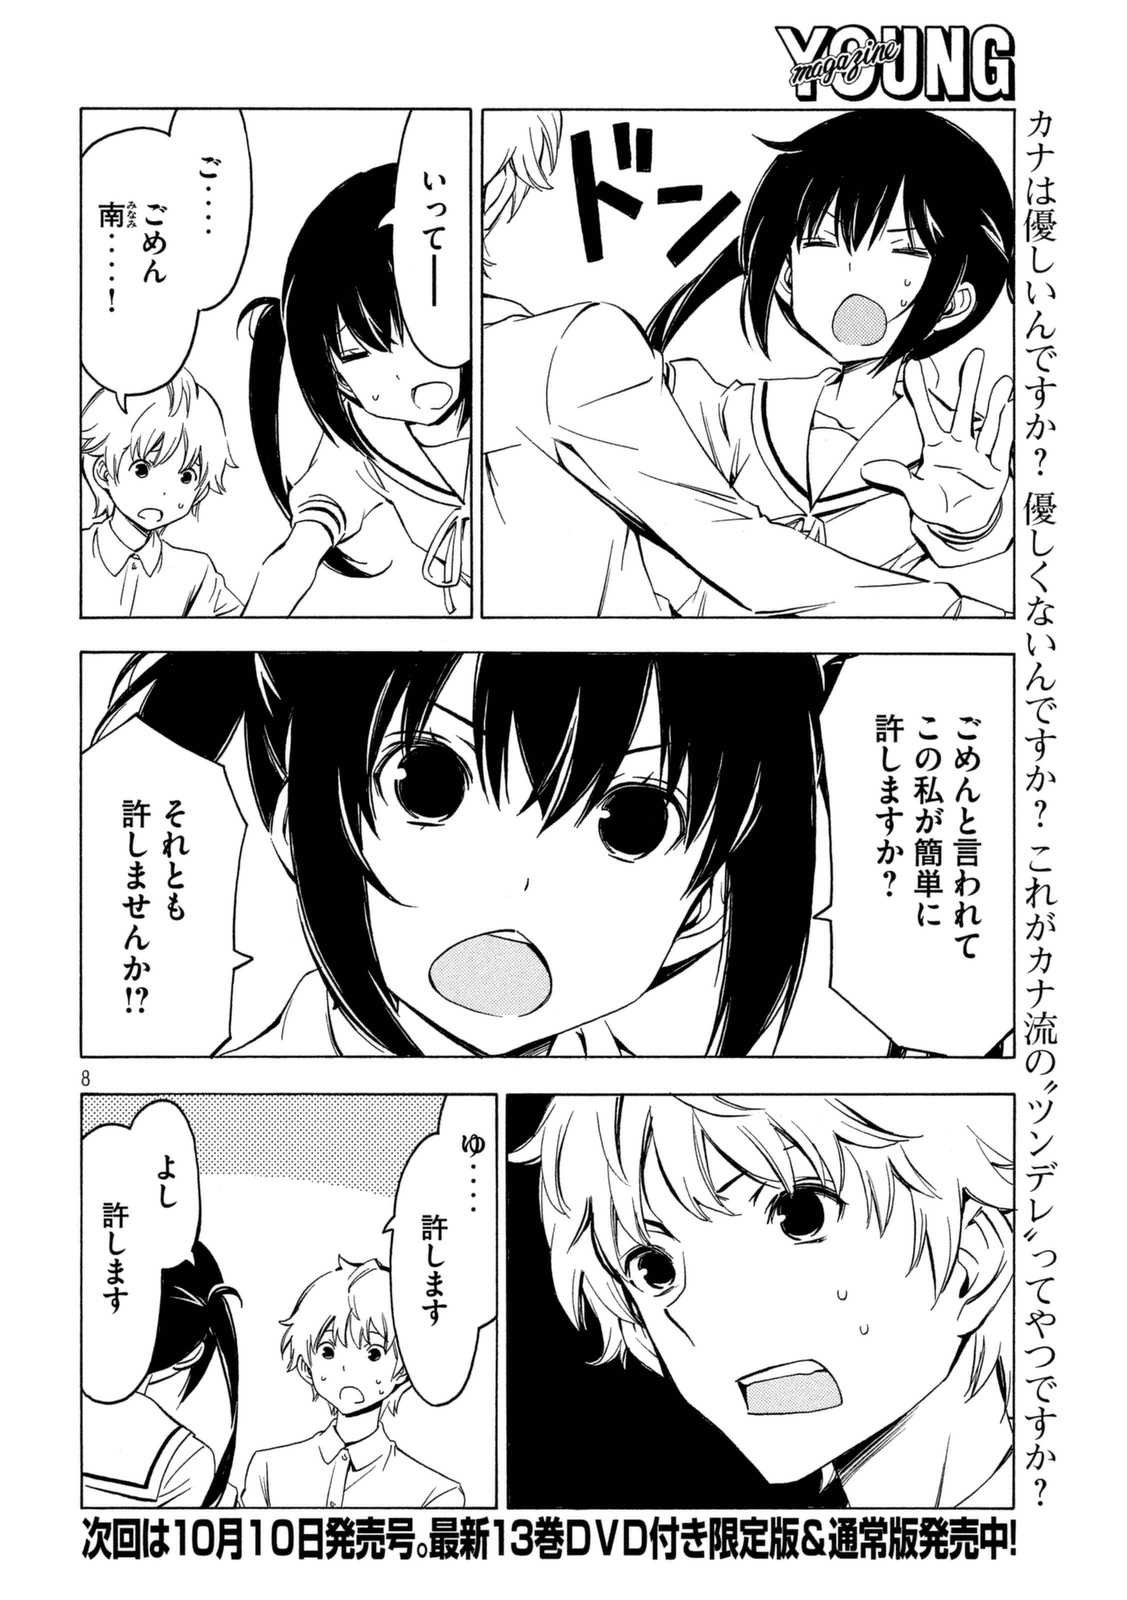 Minami-ke - Chapter 277 - Page 8